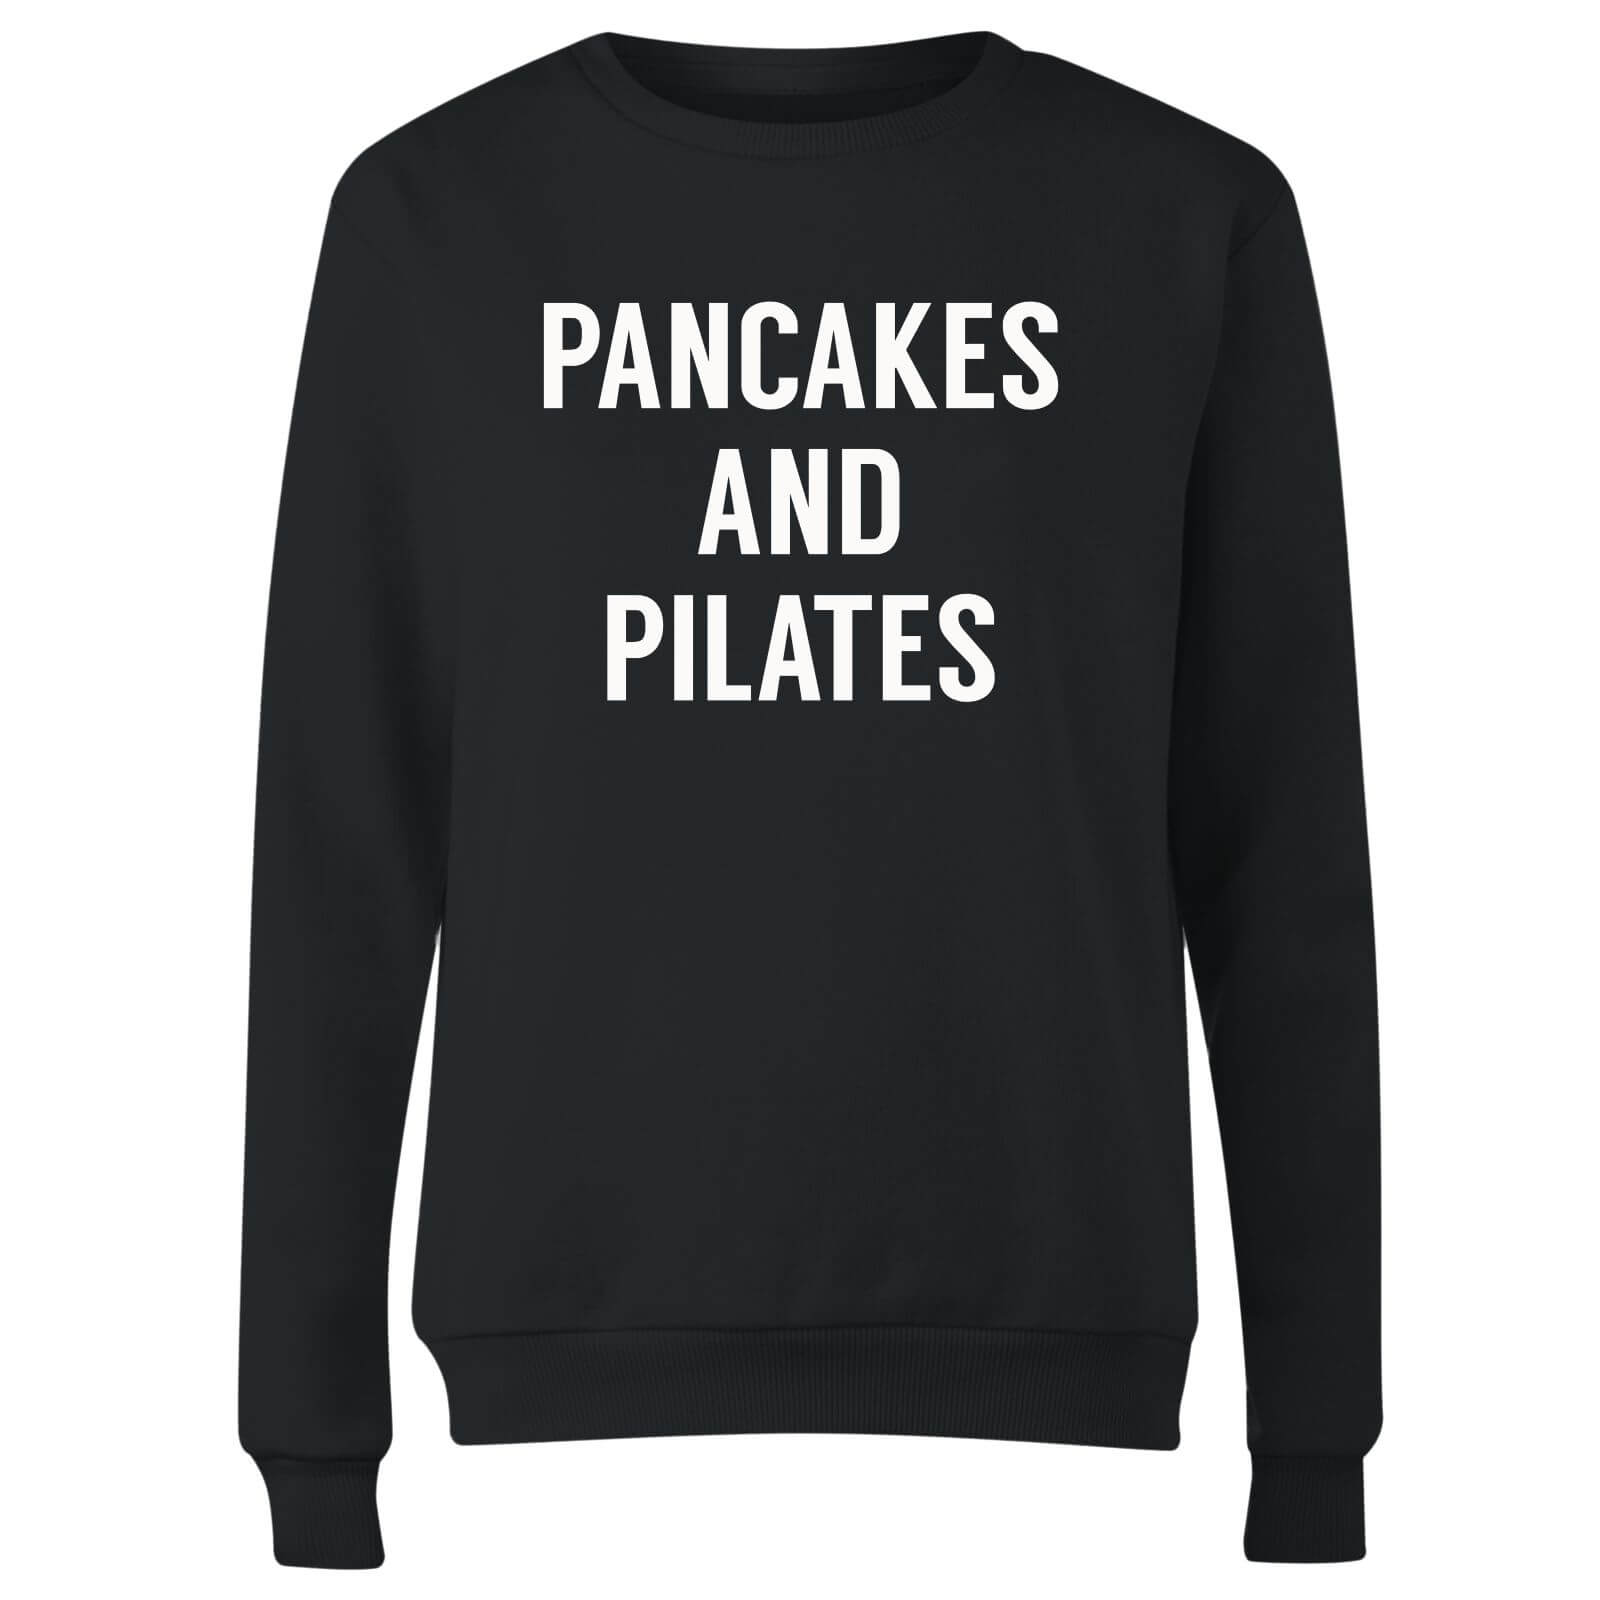 Pancakes and Pilates Women's Sweatshirt - Black - 5XL - Black